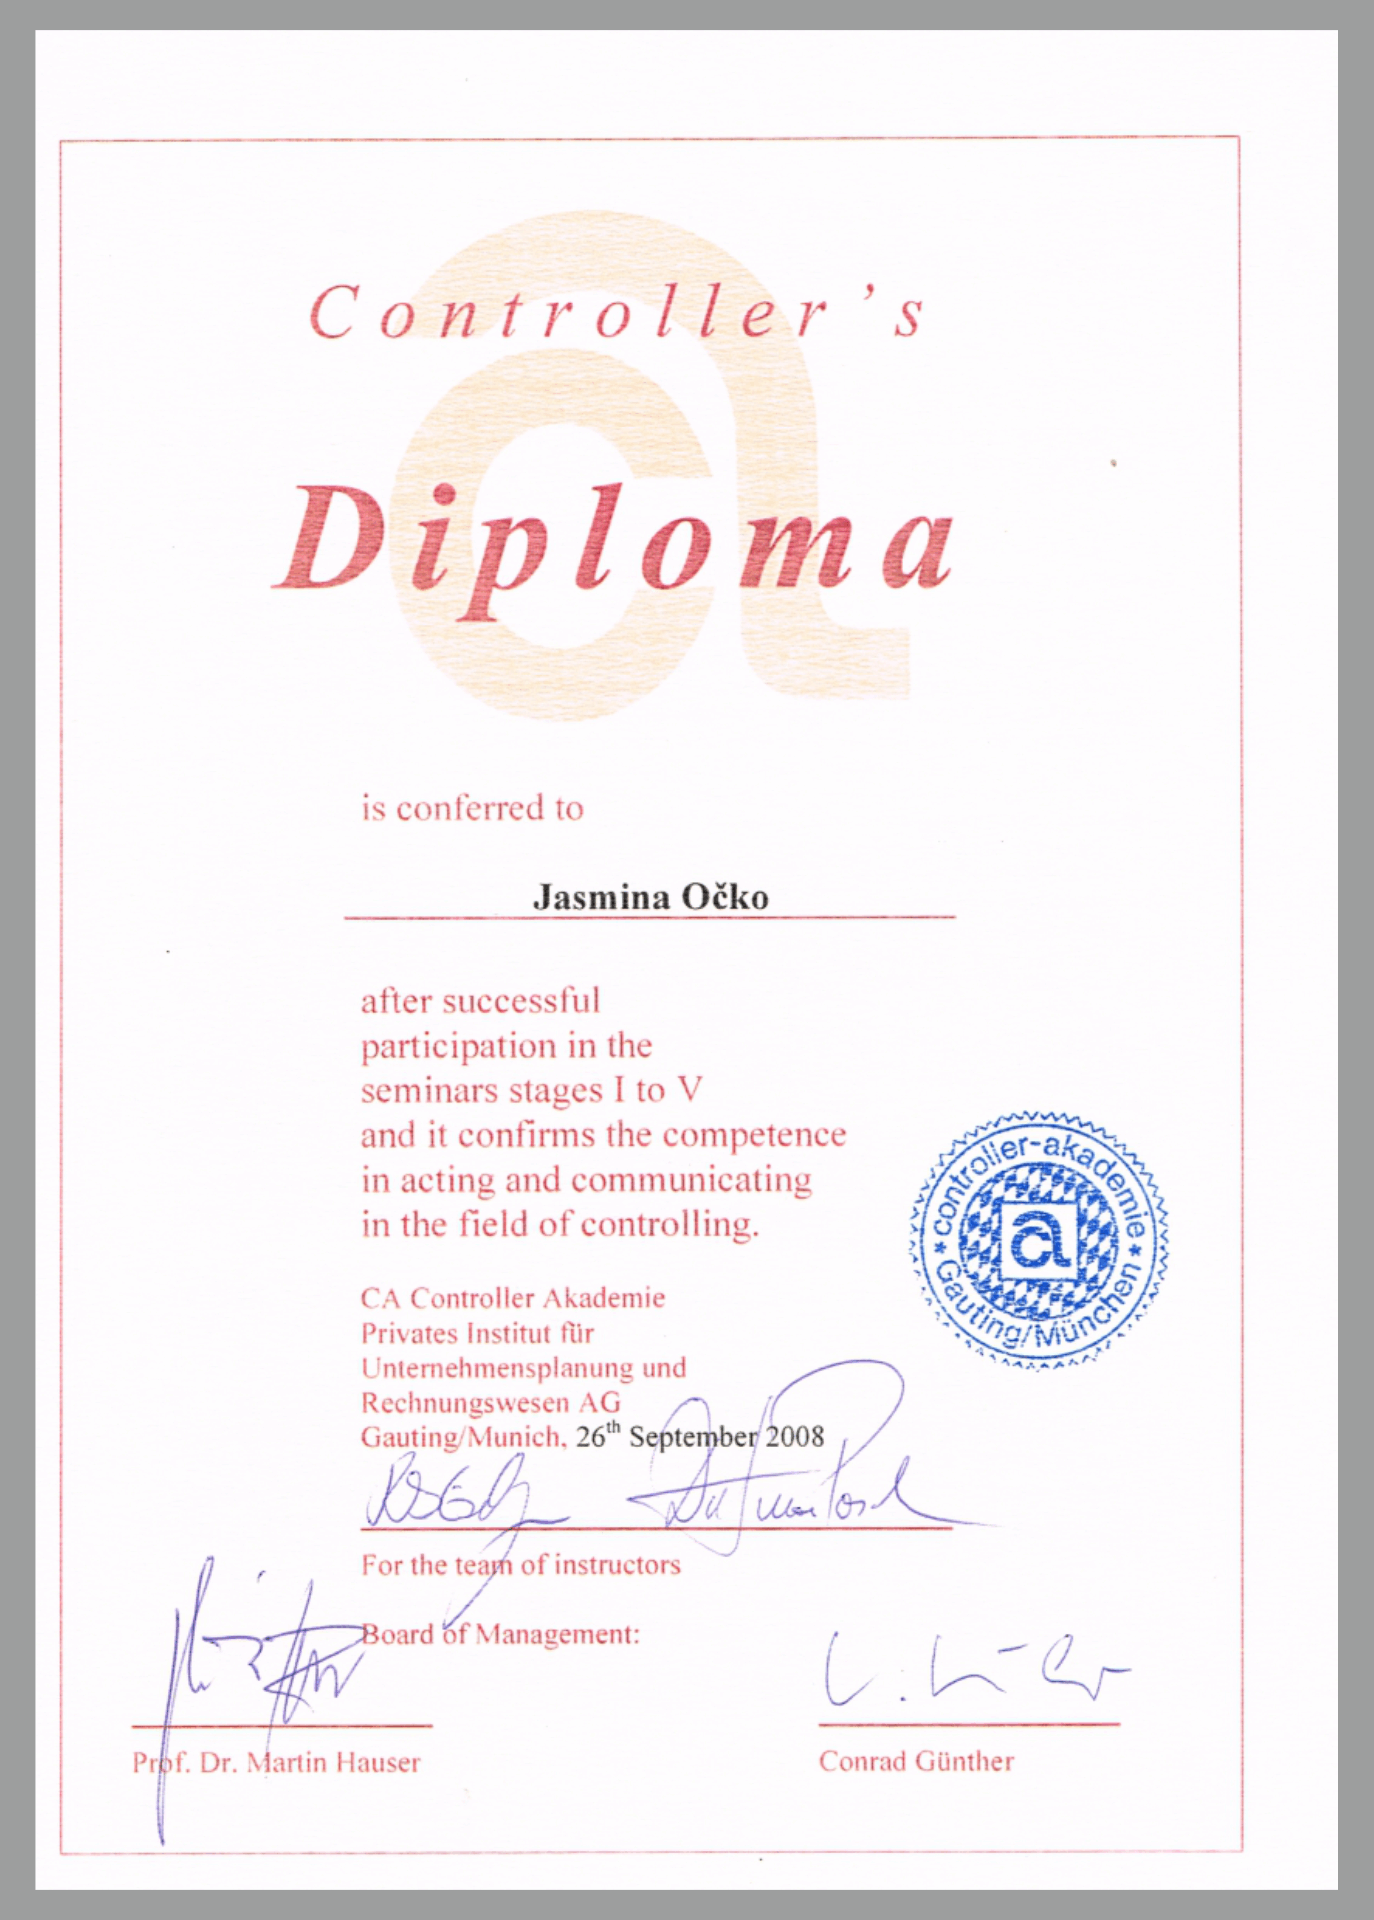 ca controllers diploma